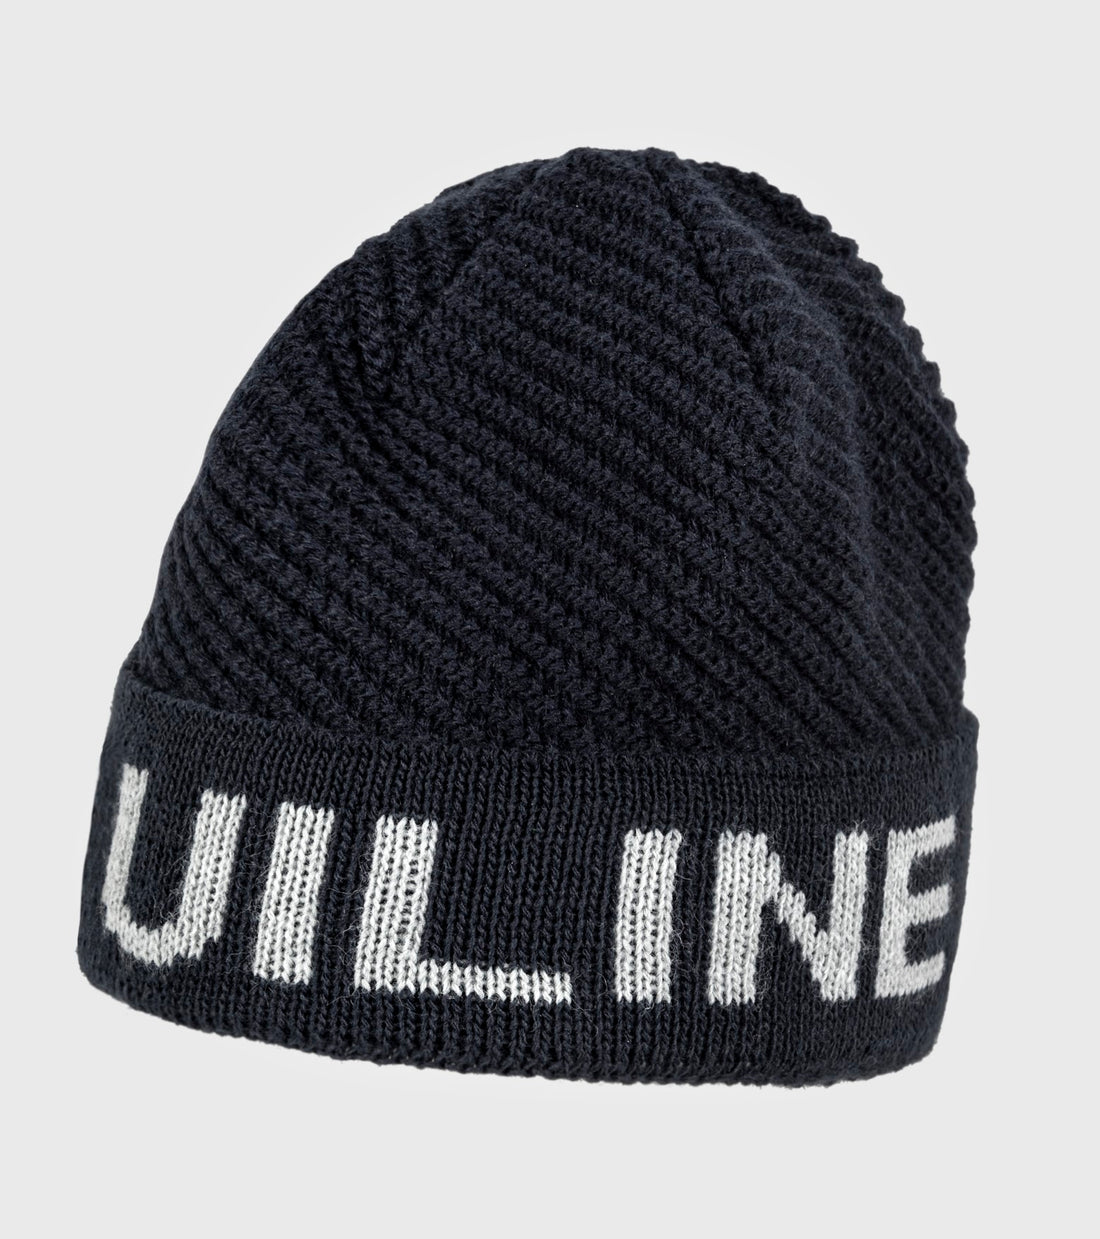 Equiline Clafic Beanie Hat